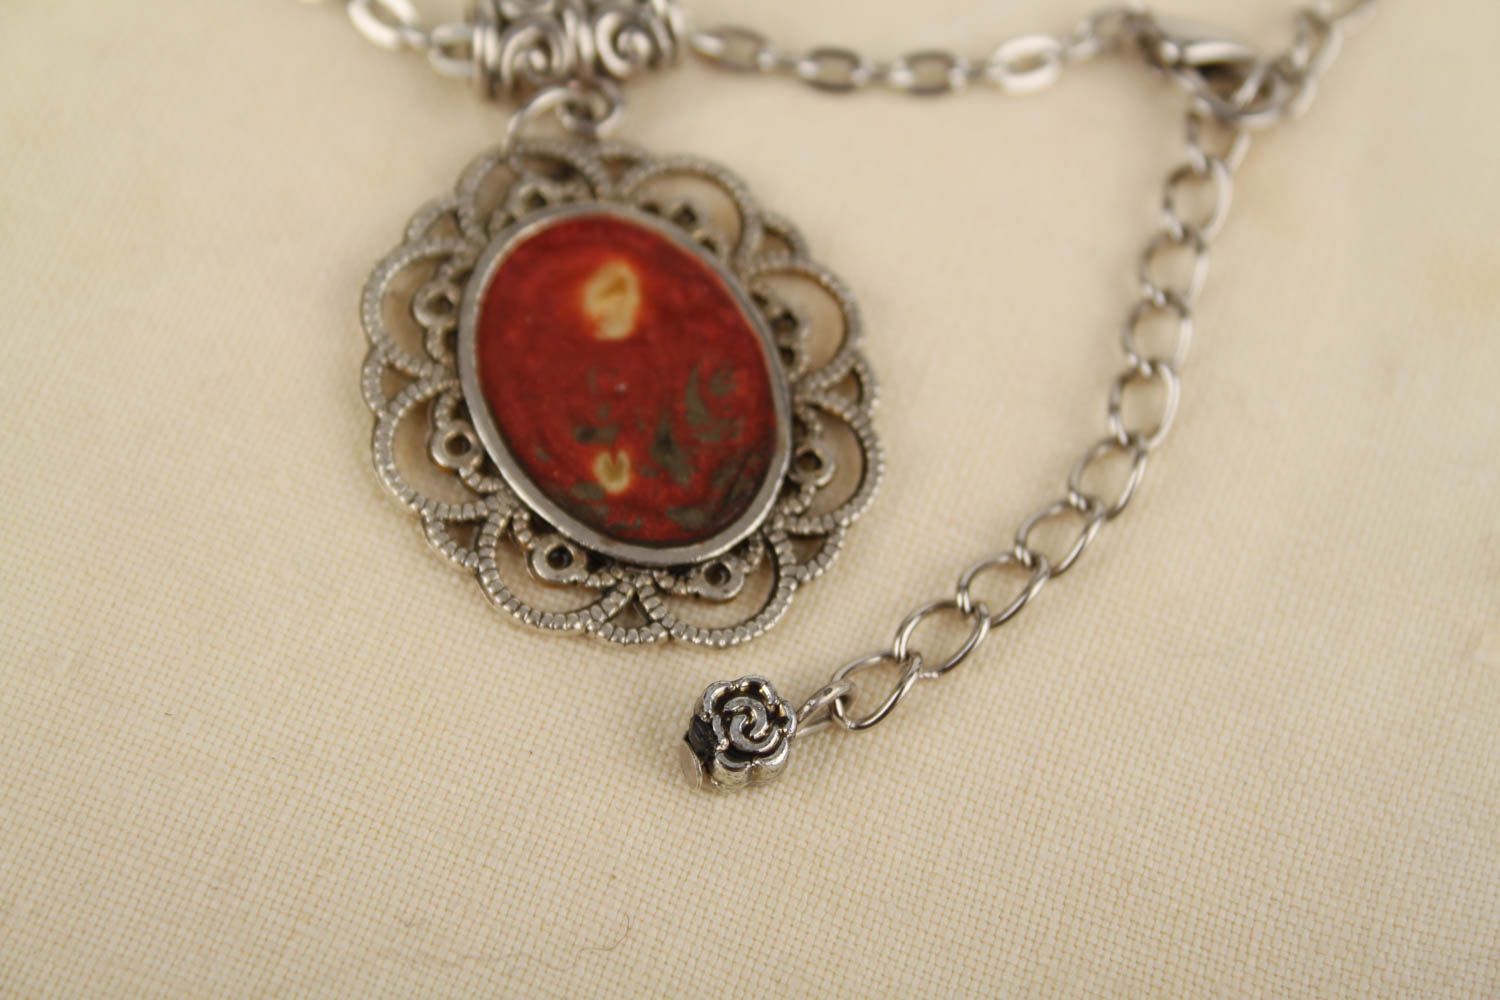 Vintage handmade metal pendant metal necklace cool neck accessories ideas photo 5